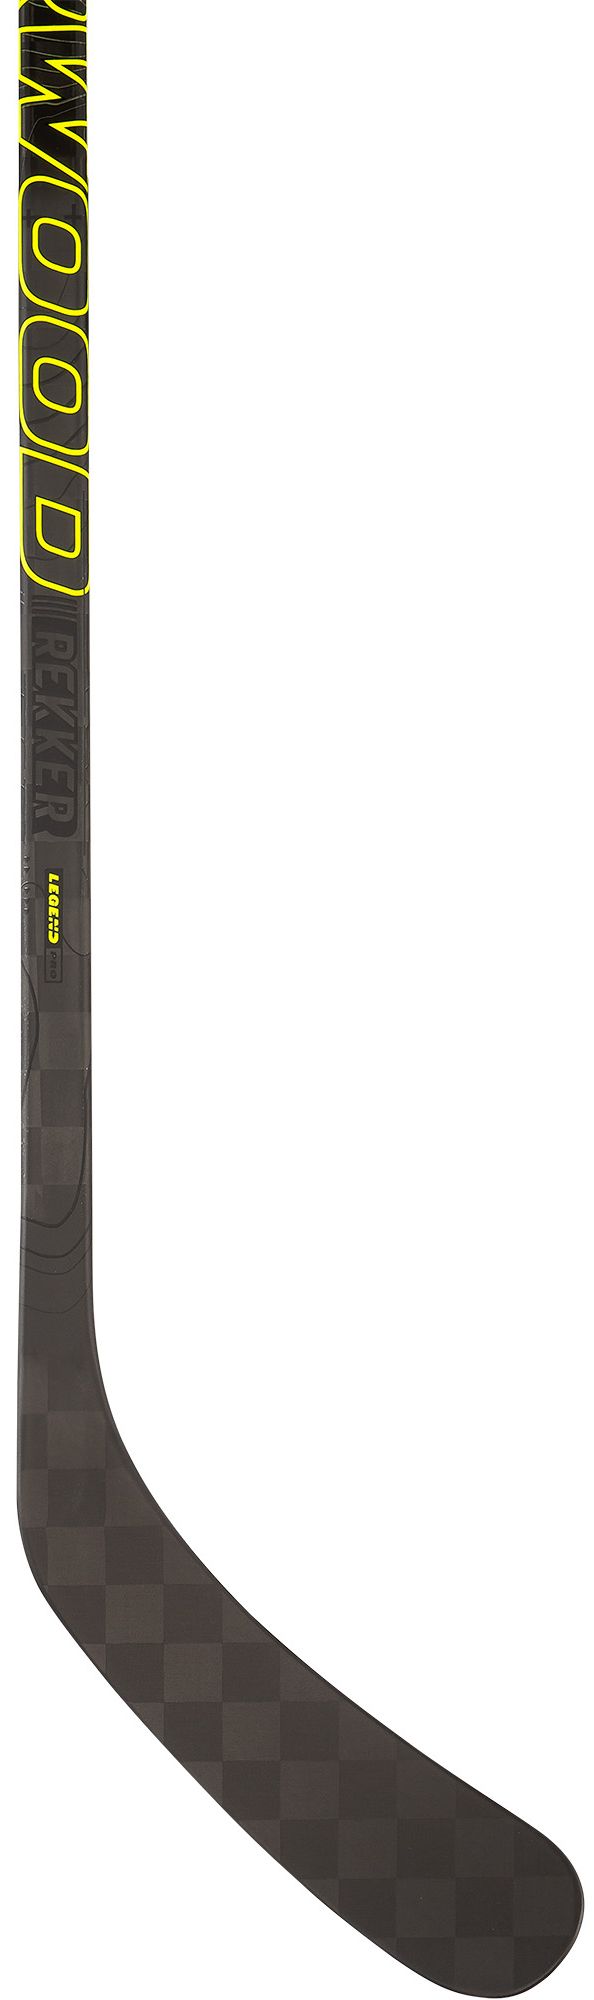 Sher-Wood Legend Pro Ice Hockey Stick - Intermediate